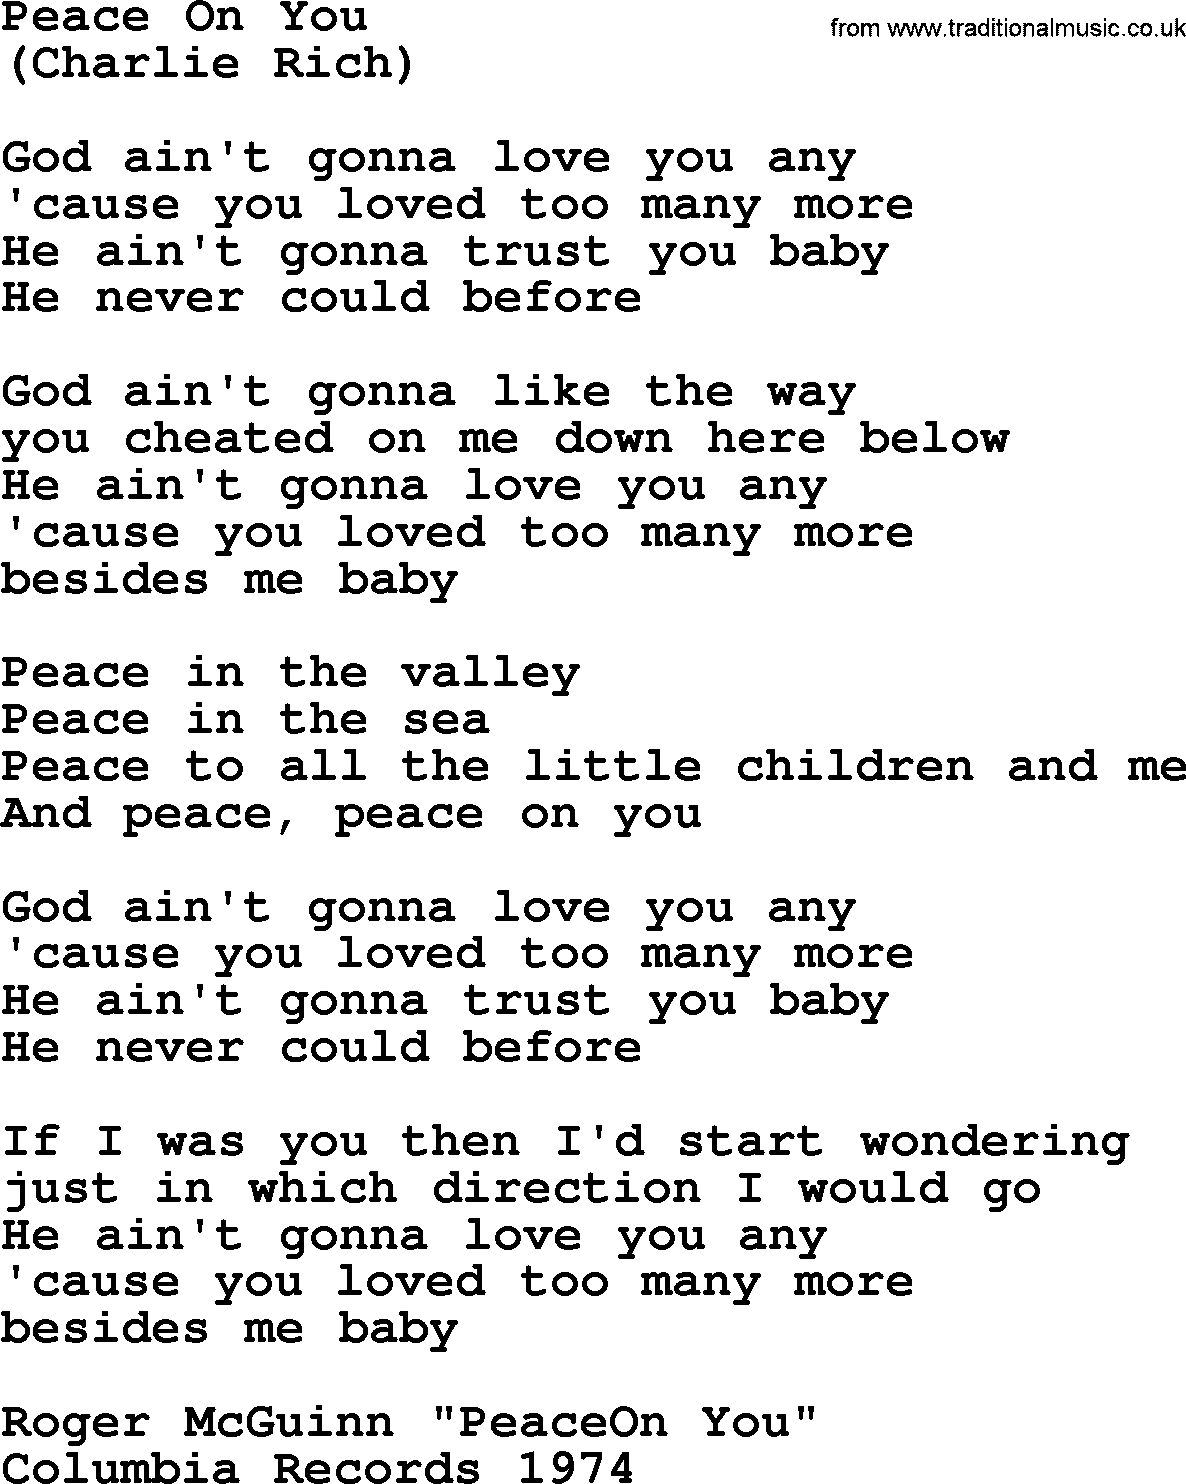 The Byrds song Peace On You, lyrics